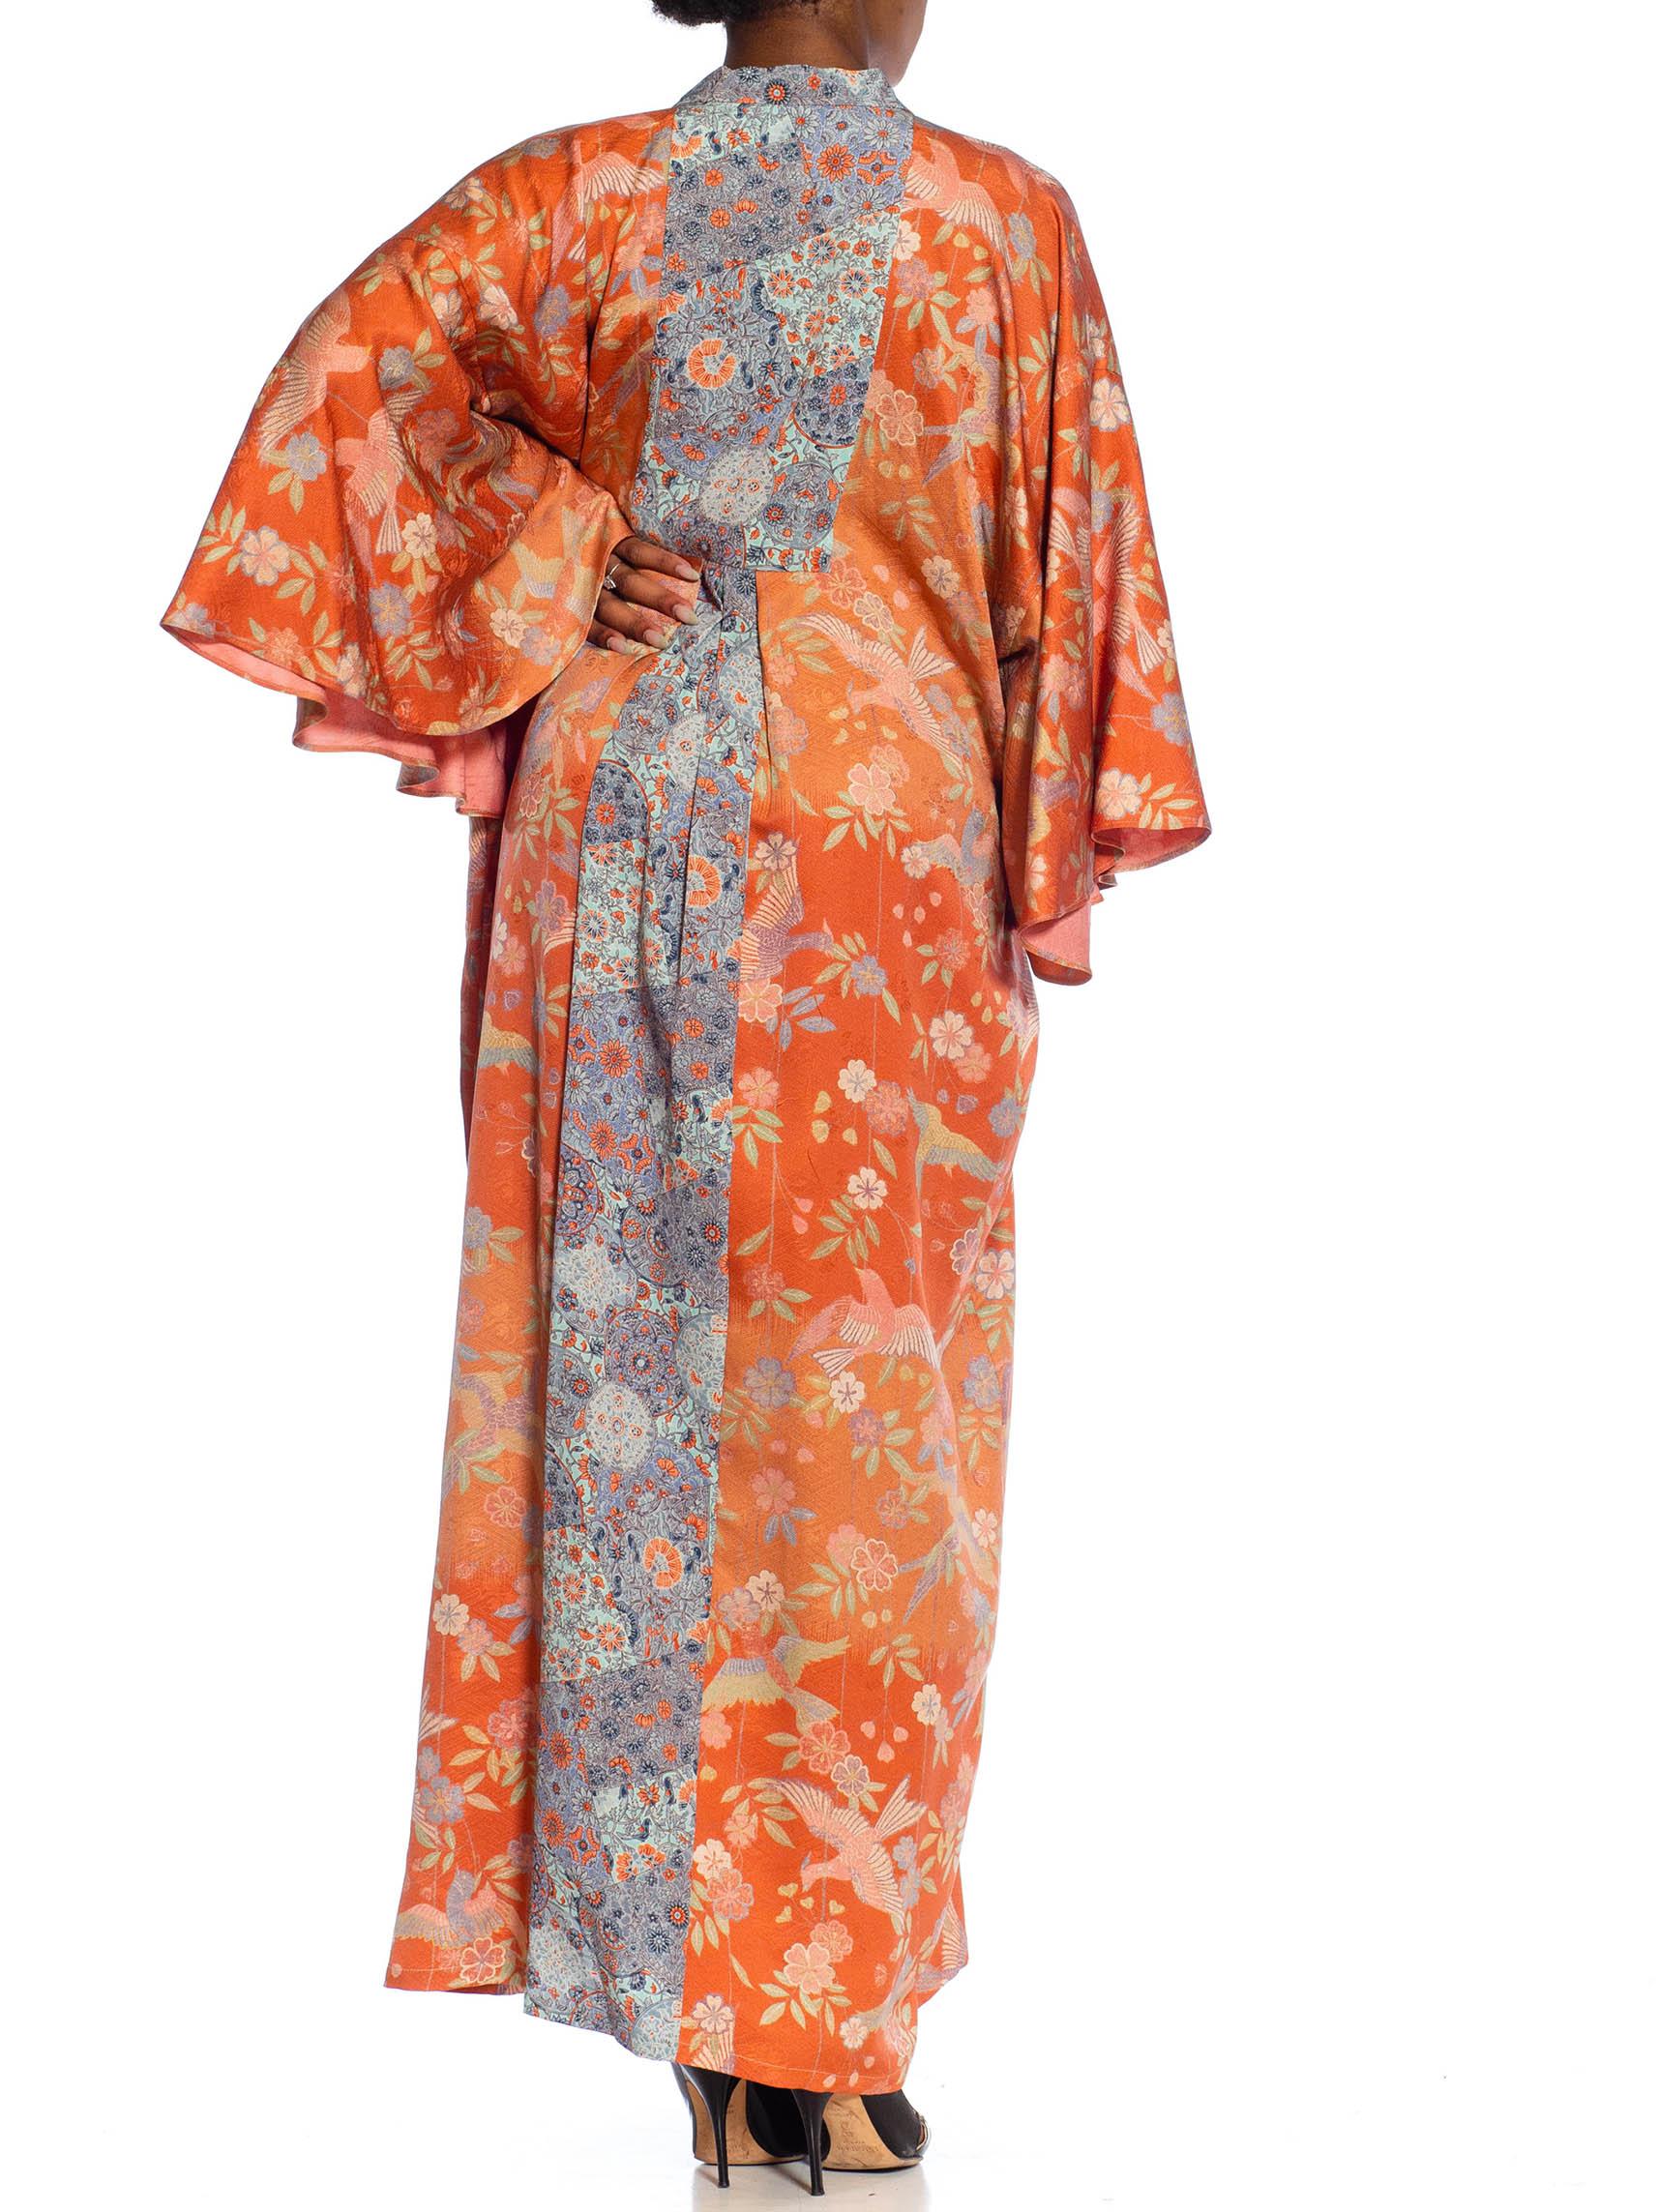 Women's MORPHEW COLLECTION Orange Ombré Floral Japanese Kimono Silk Kaftan